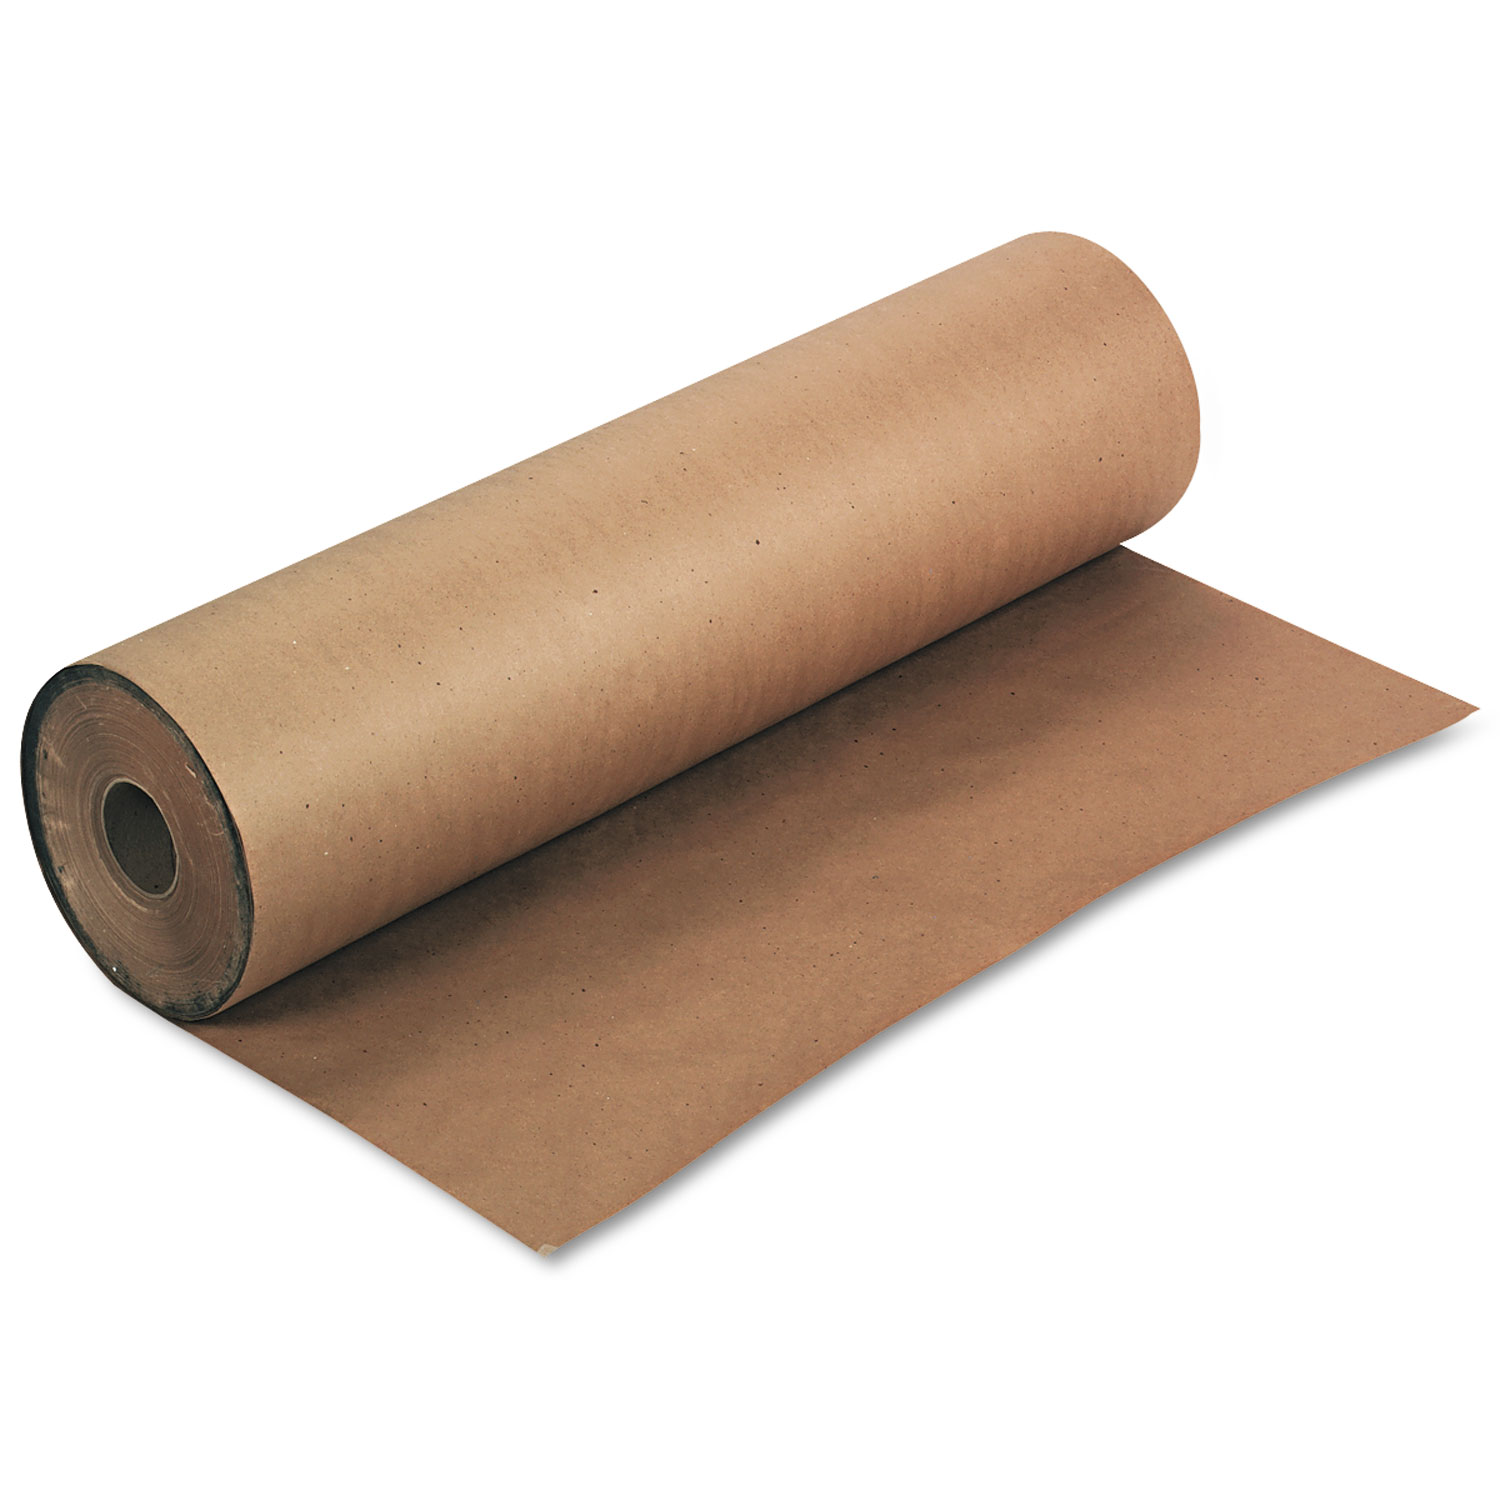  Pacon 5836 Kraft Paper Roll, 50lb, 36 x 1000ft, Natural (PAC5836) 